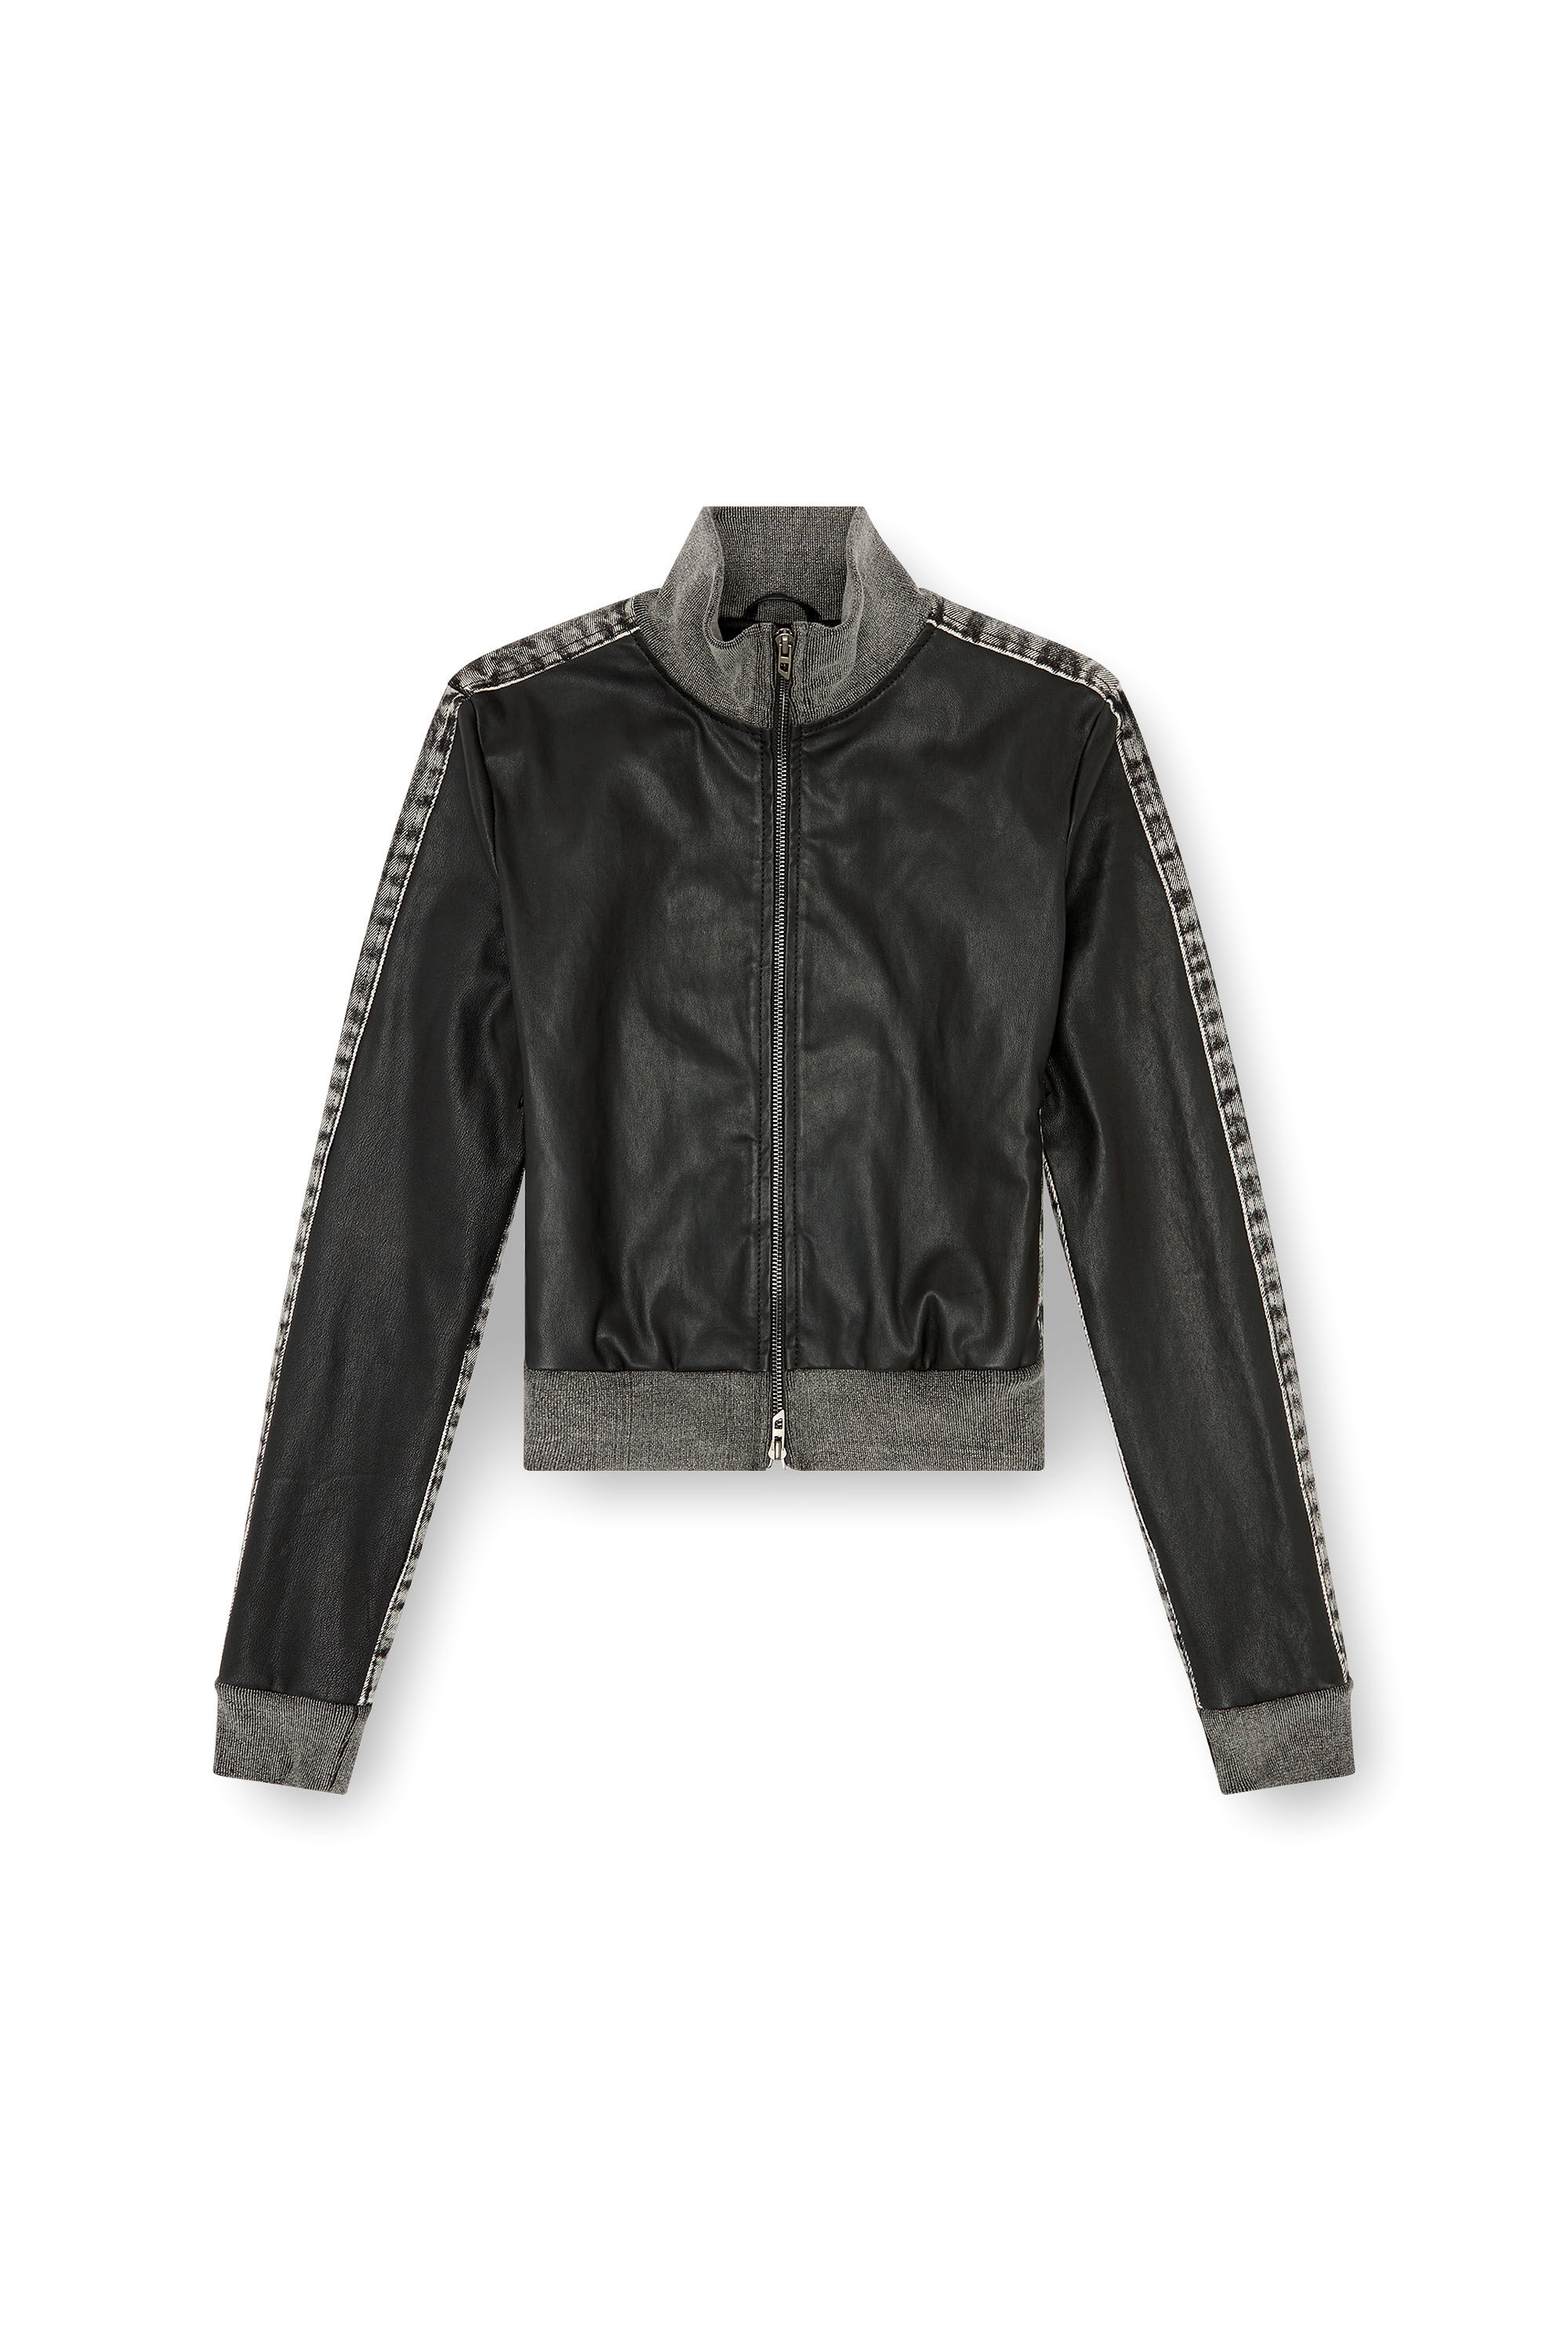 Diesel - L-EADER, Woman Hybrid jacket in leather and denim in Black - Image 2